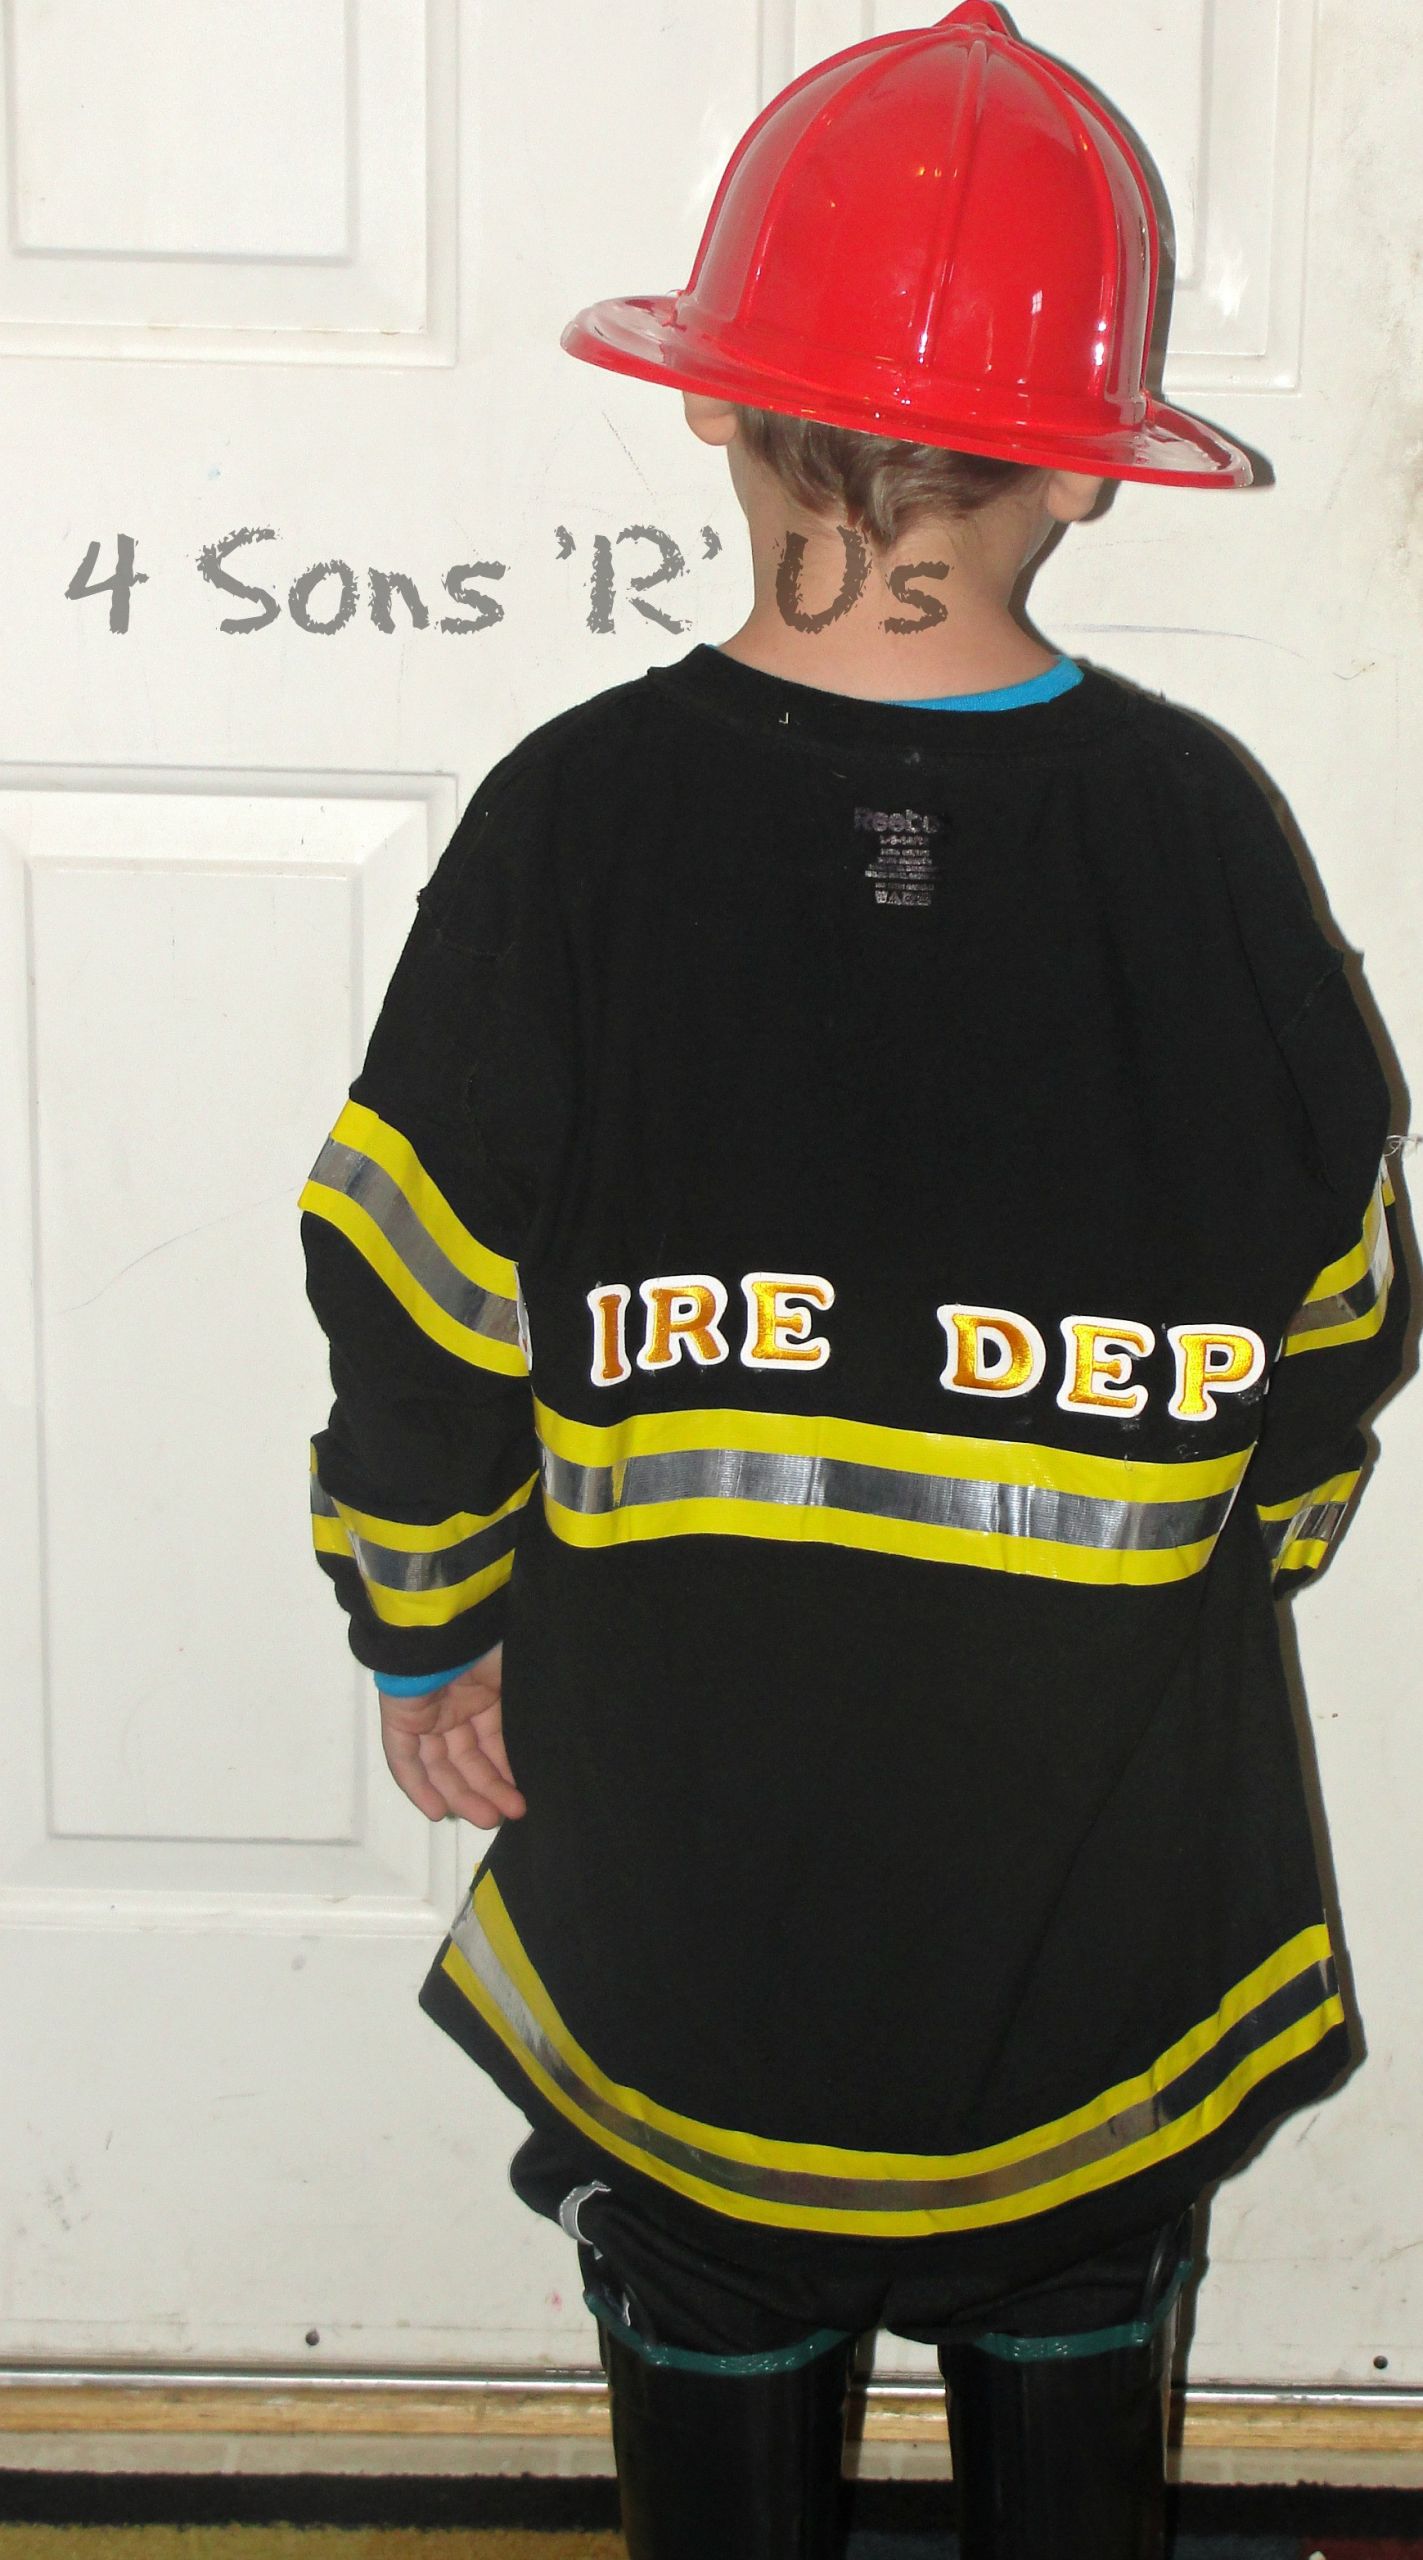 Firefighter Costume DIY
 DIY Fireman Costume 4 Sons R Us